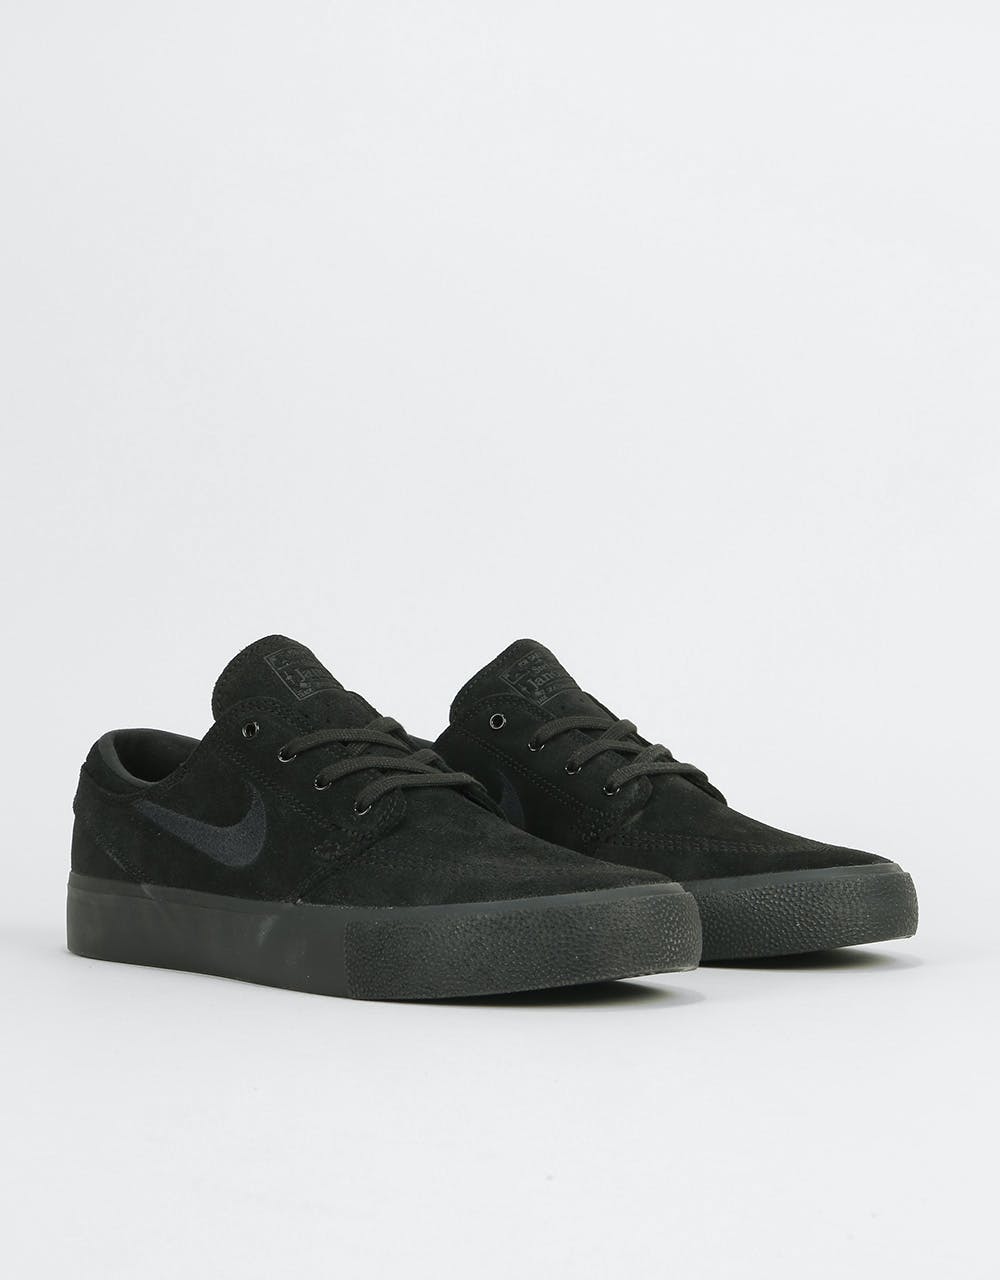 Nike SB Zoom Janoski RM Skate Shoes - Black/Black-Black-Black